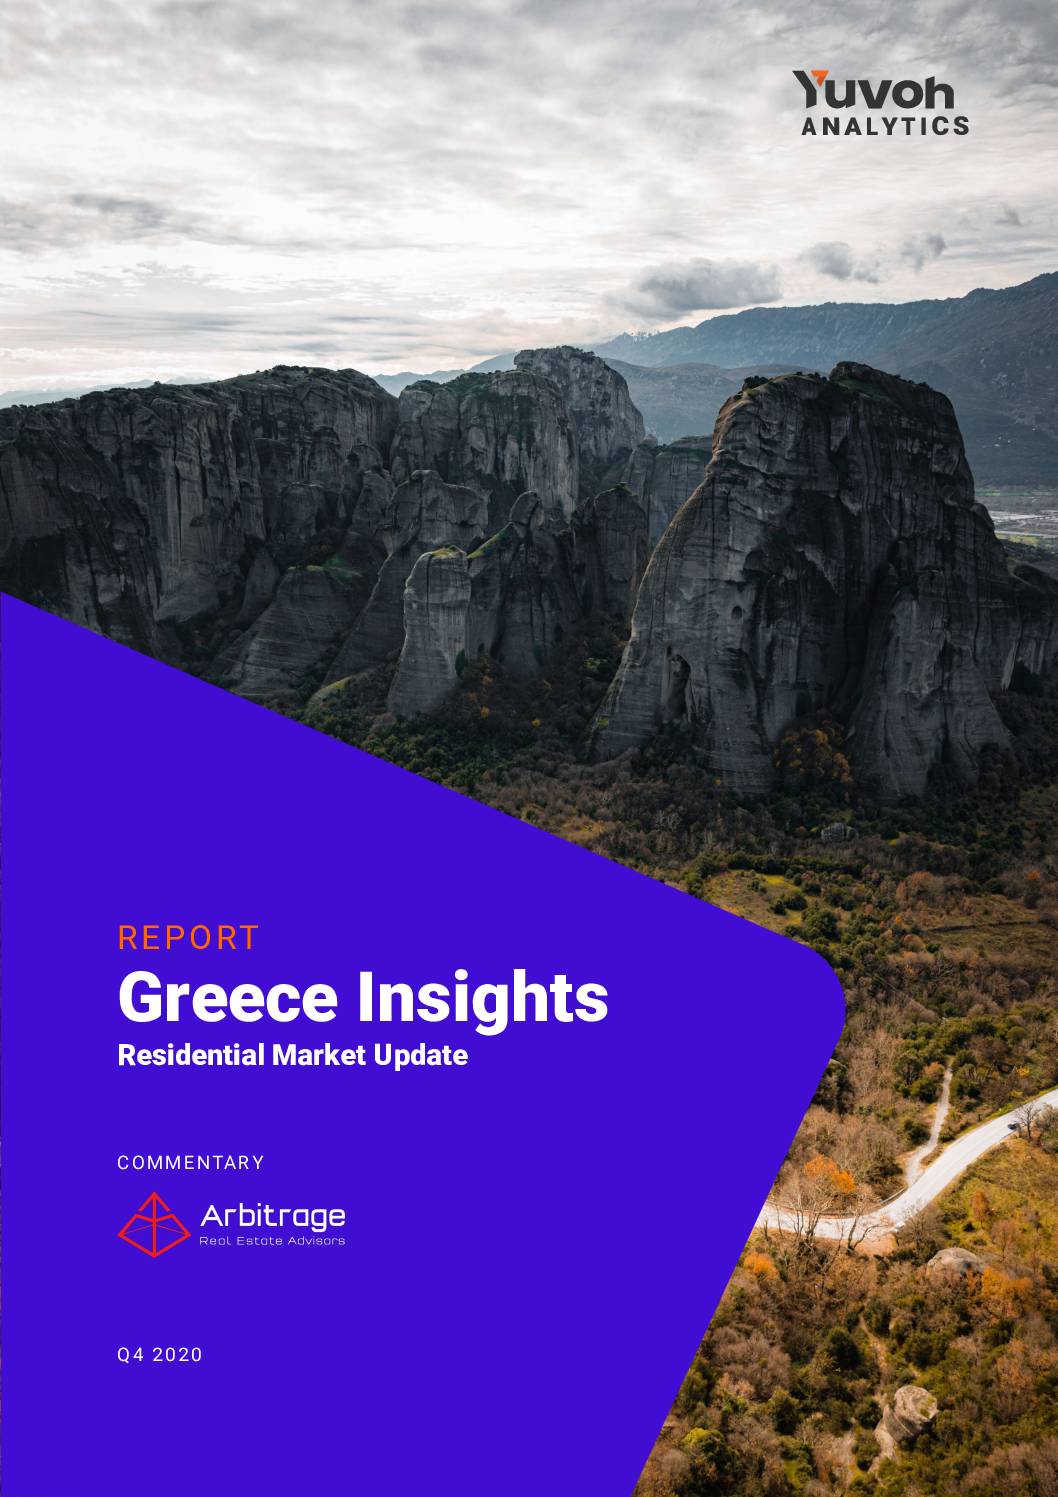 Greece Insights: Residential Market Update